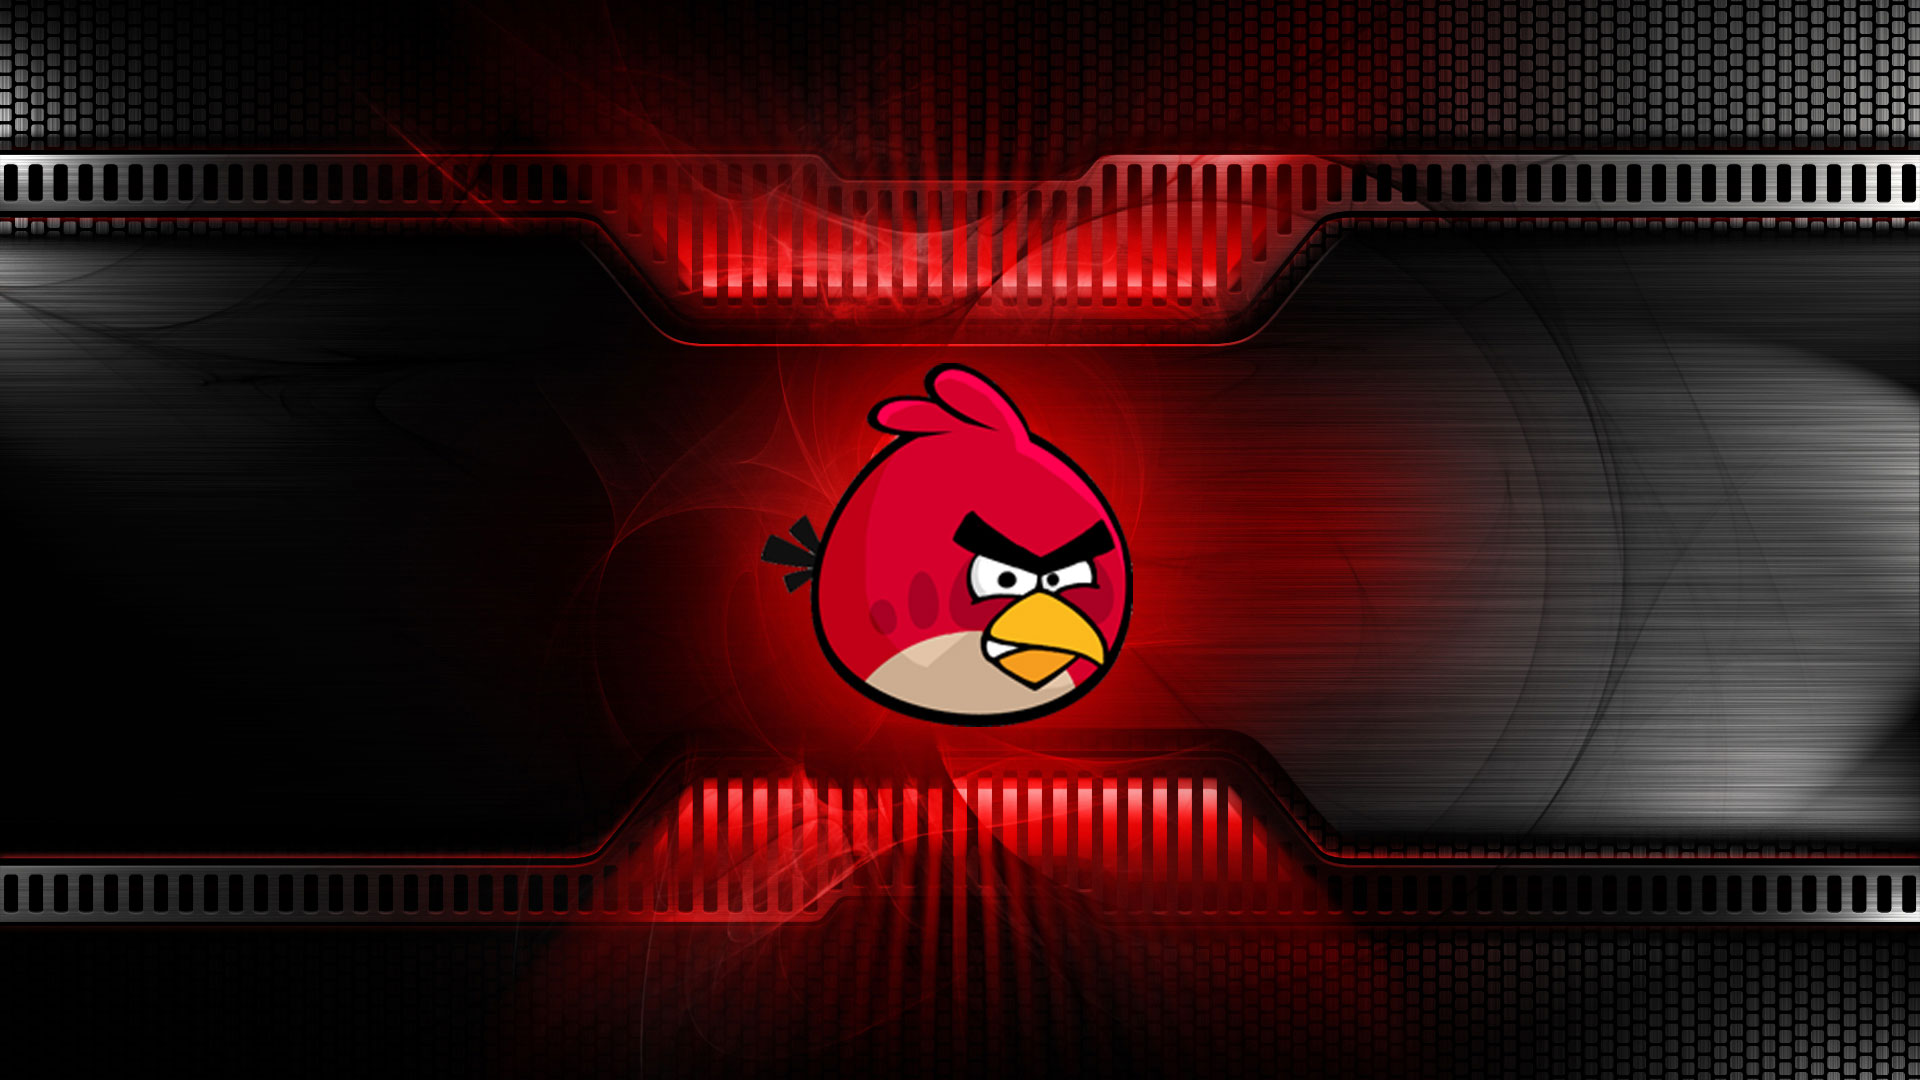 CARTOON RED ANGRY BIRDS DESKTOP BACKGROUND WALLPAPER 1080p - HD